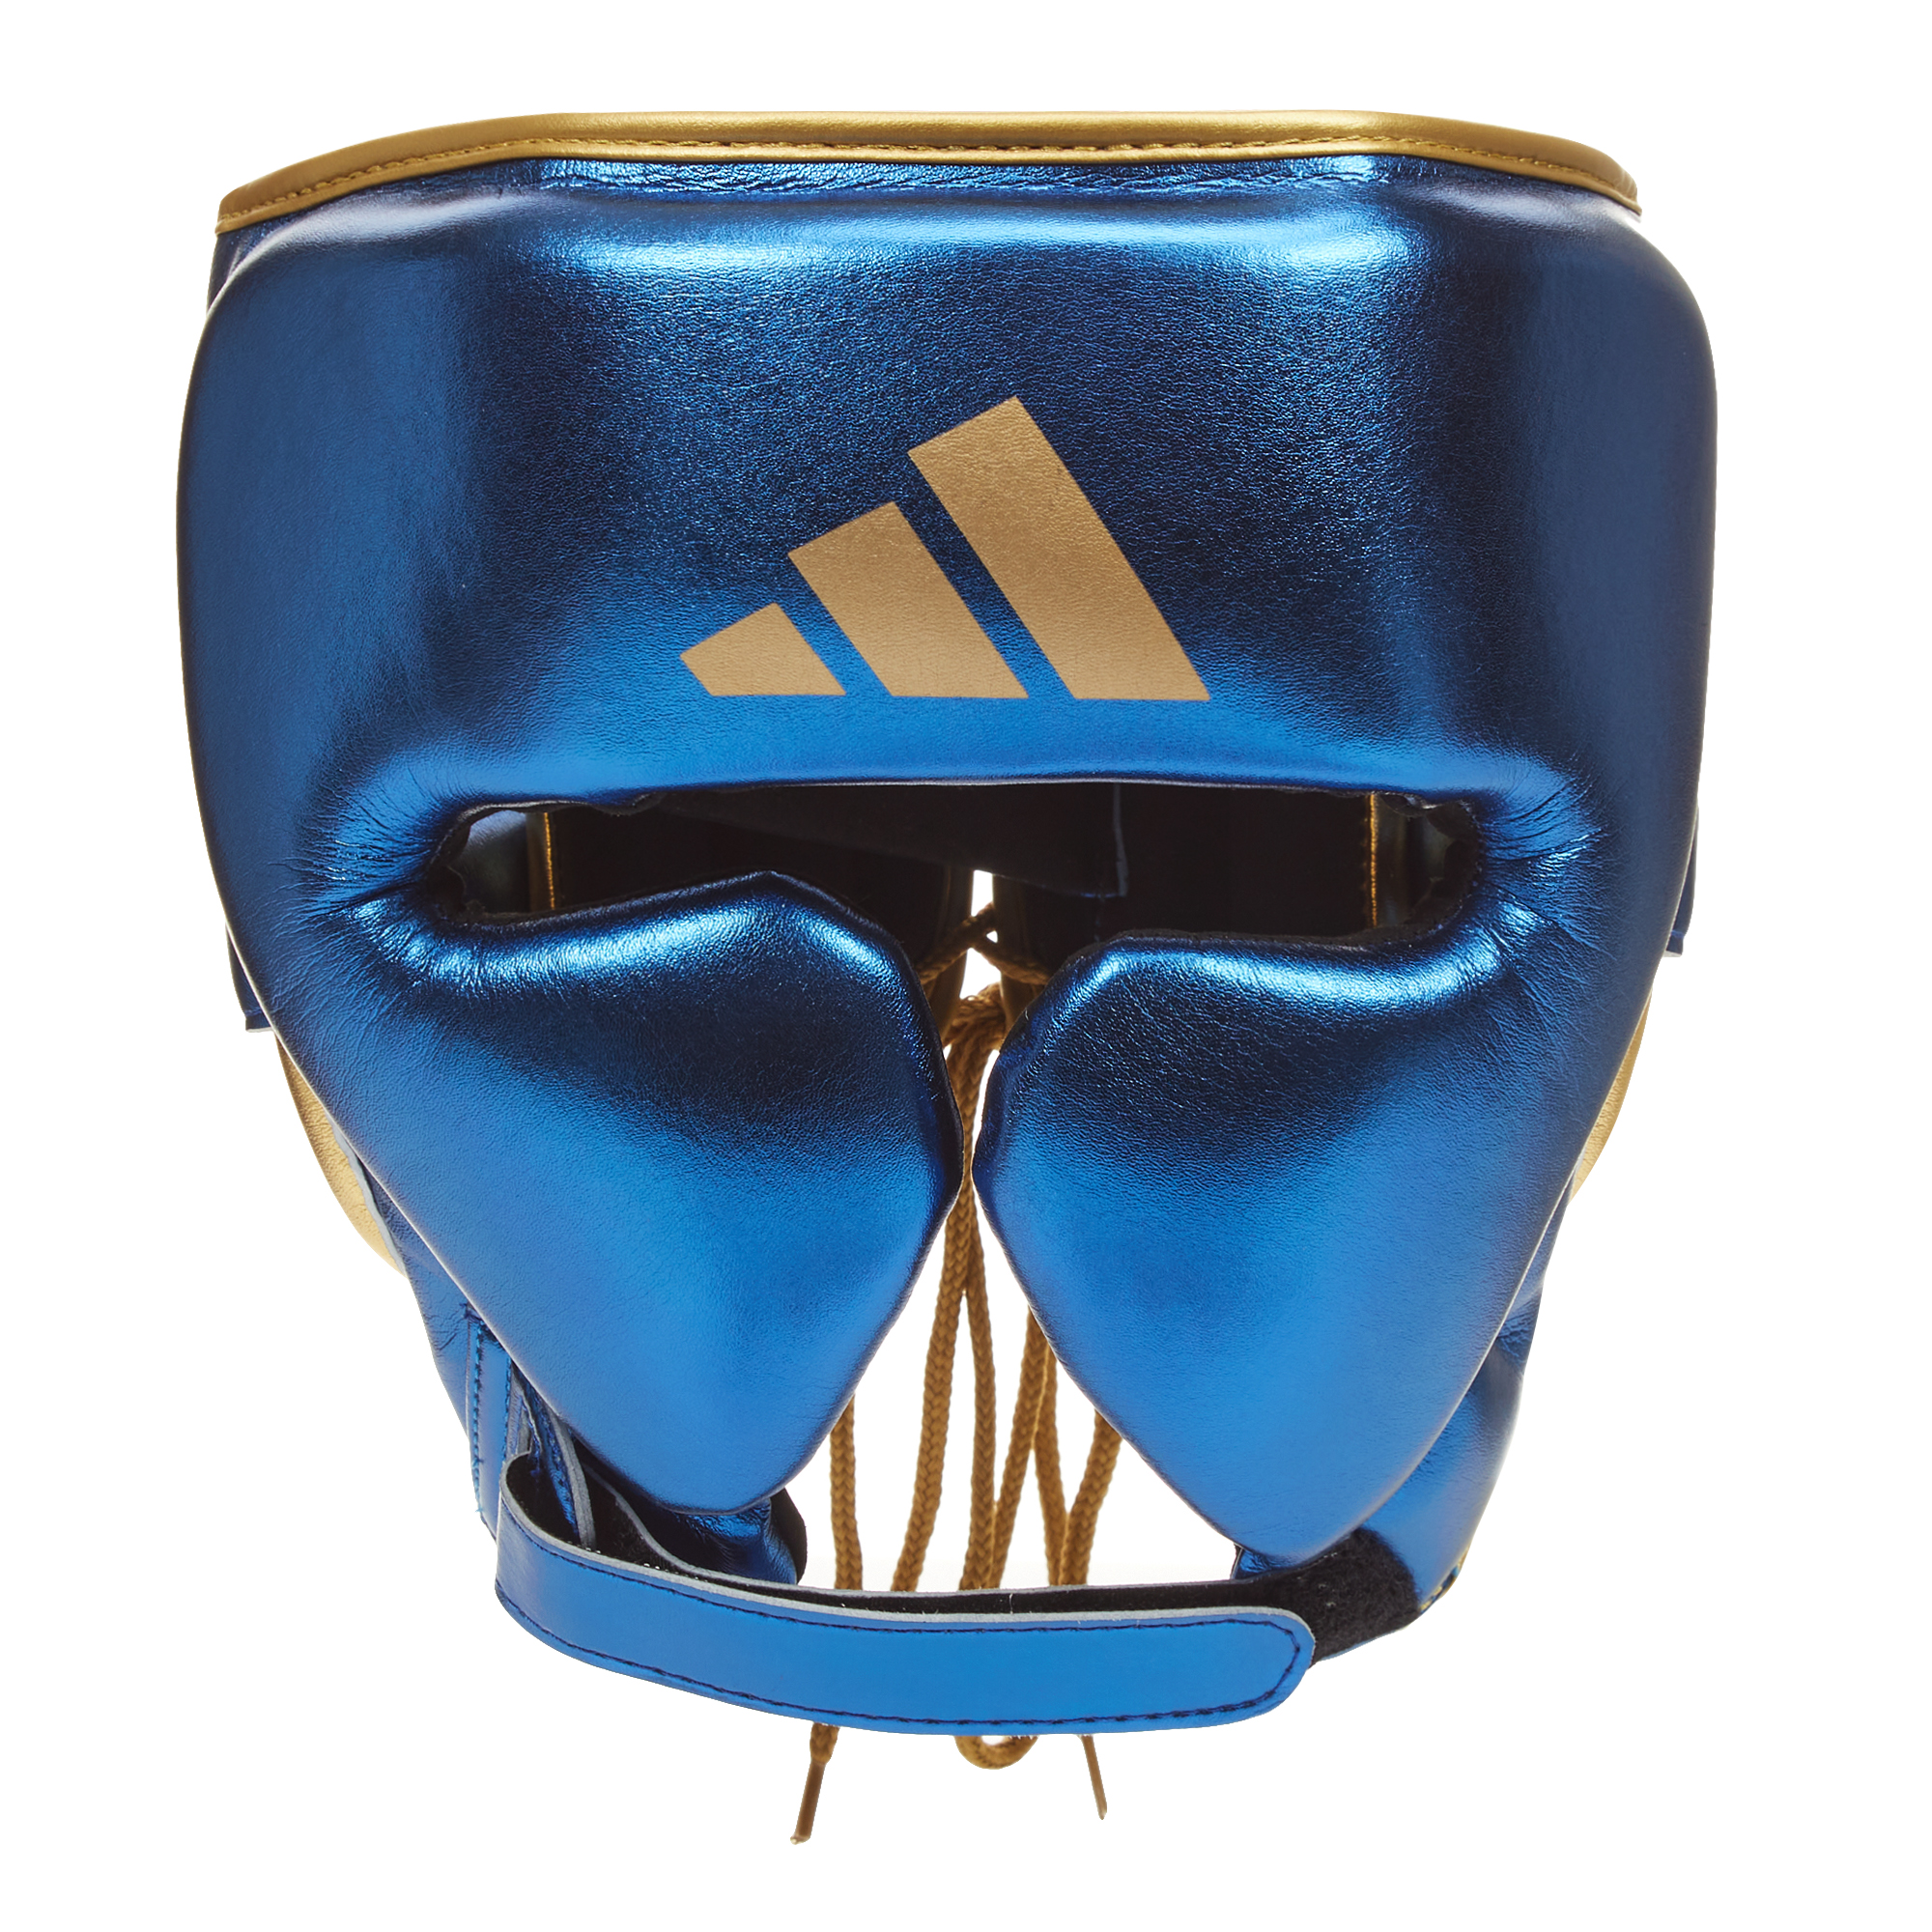 ADISTAR Pro Head Gear - BLUE/GOLD